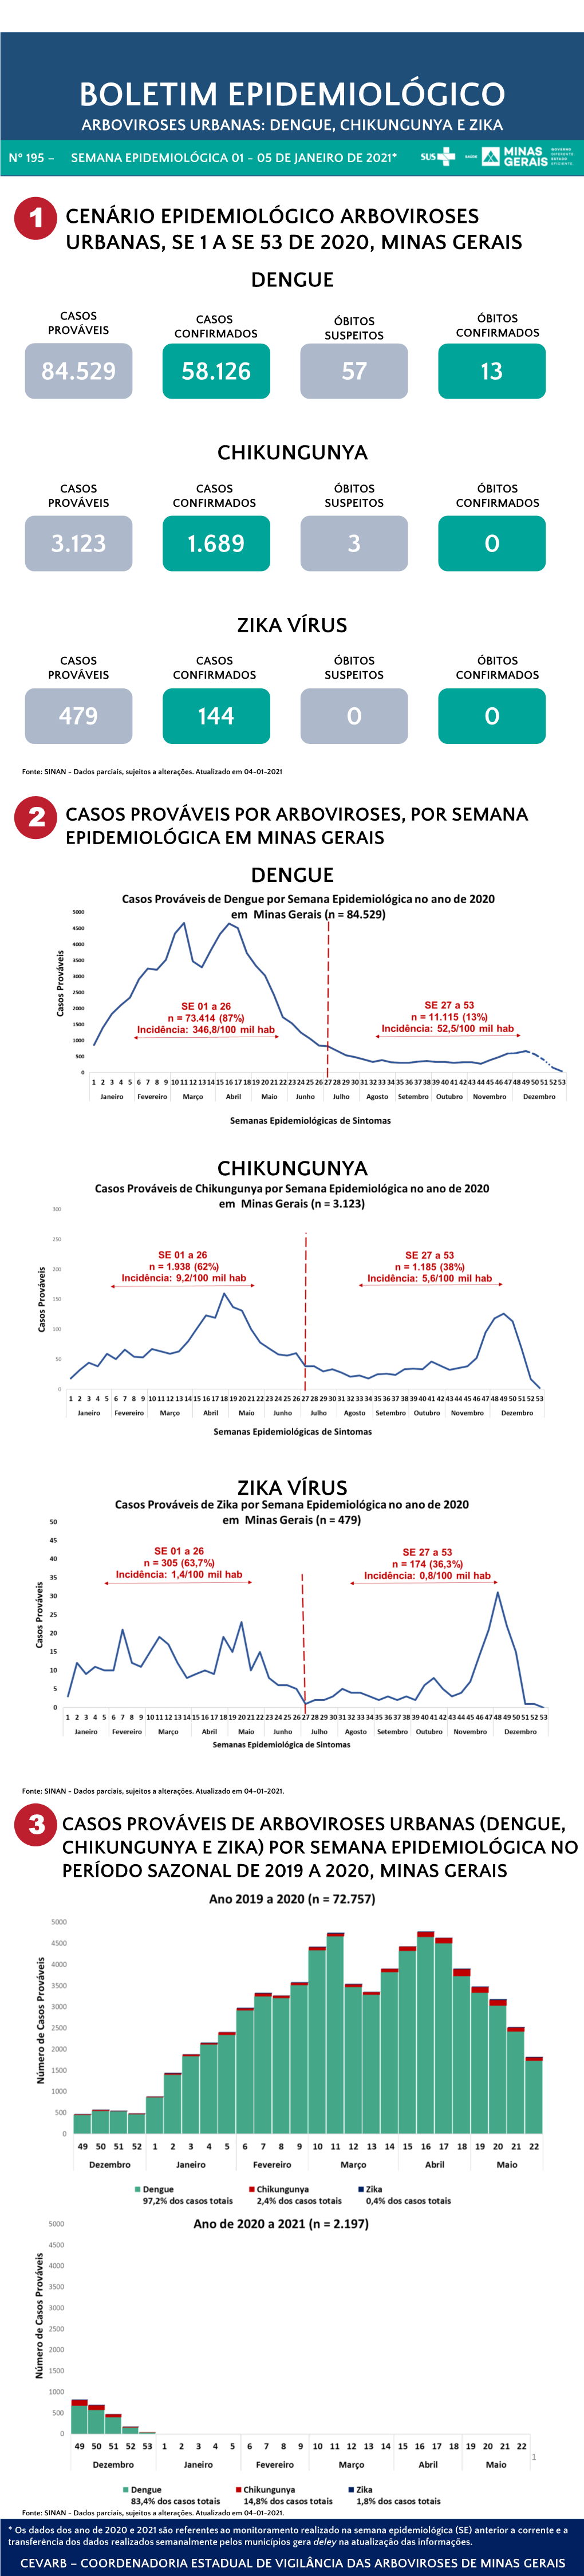 Boletim Epidemiológico Arboviroses Urbanas: Dengue, Chikungunya E Zika